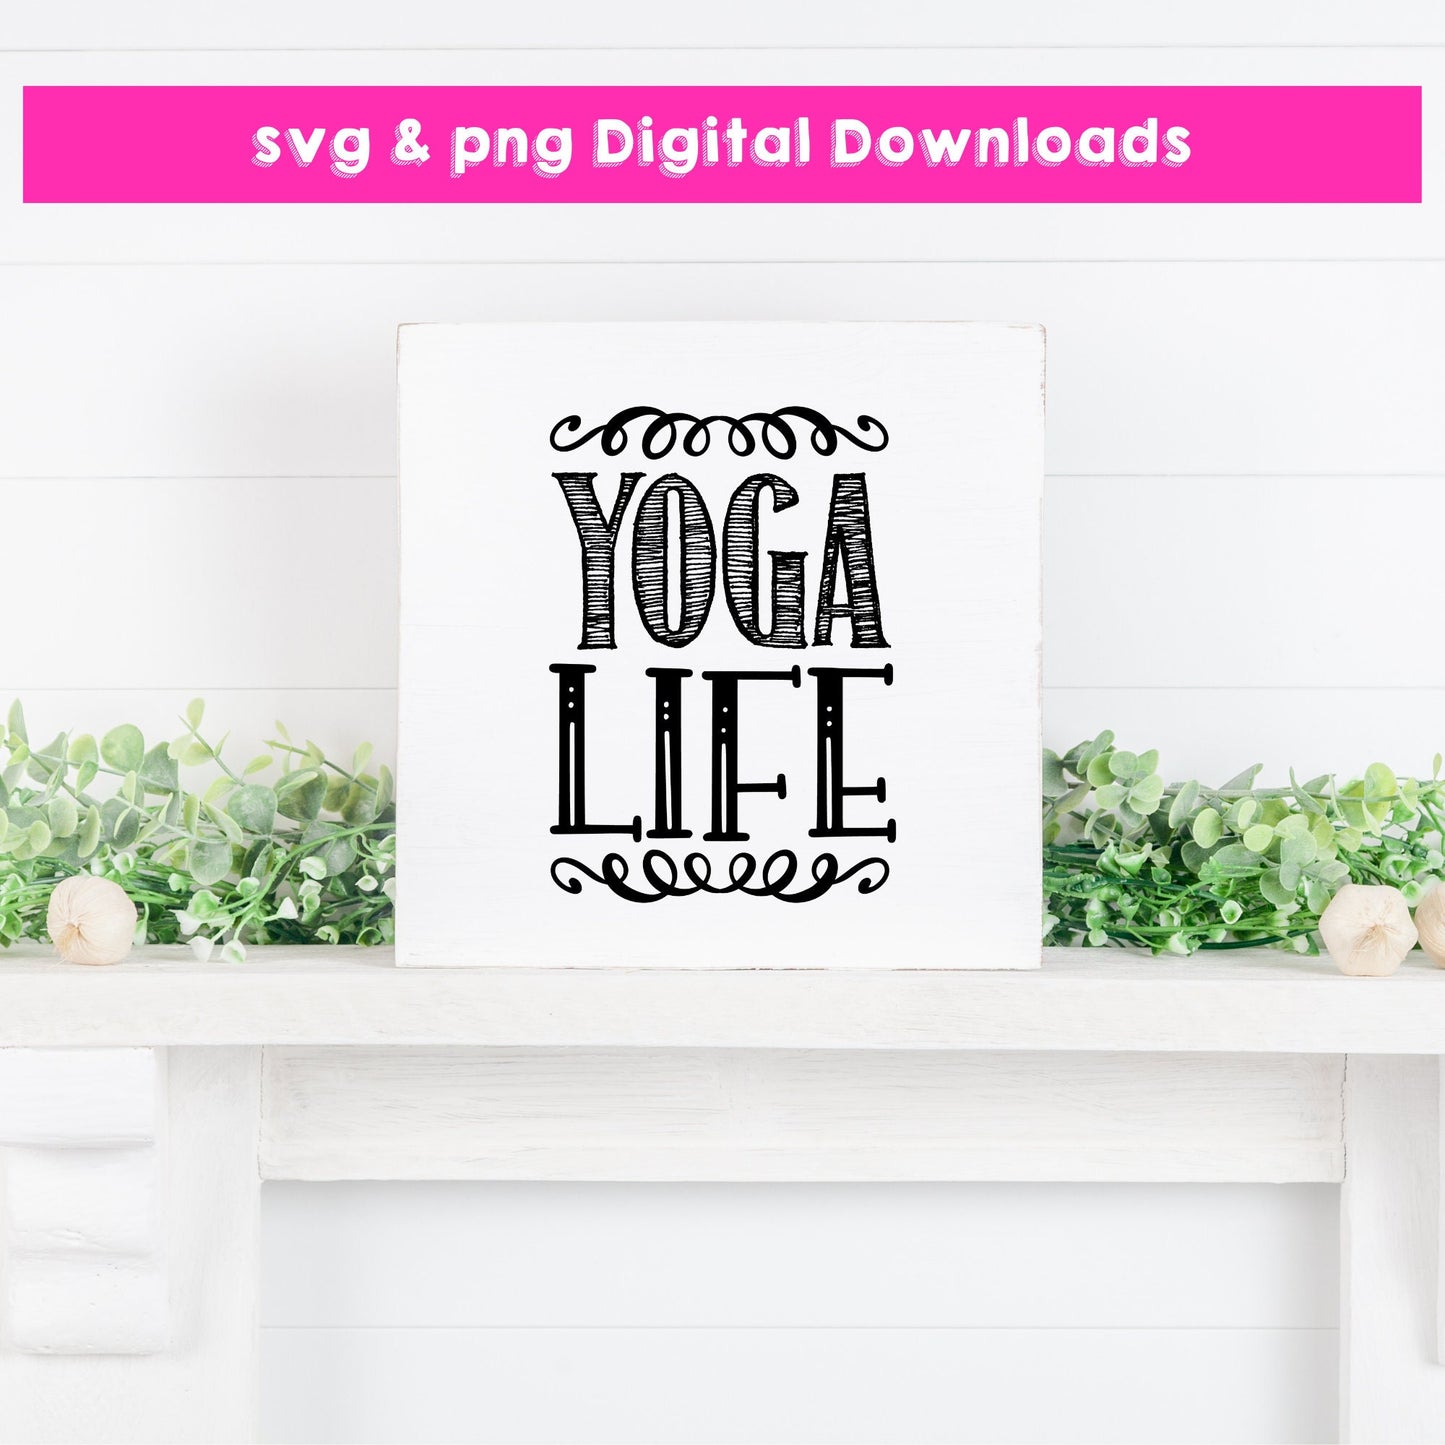 Yoga Life